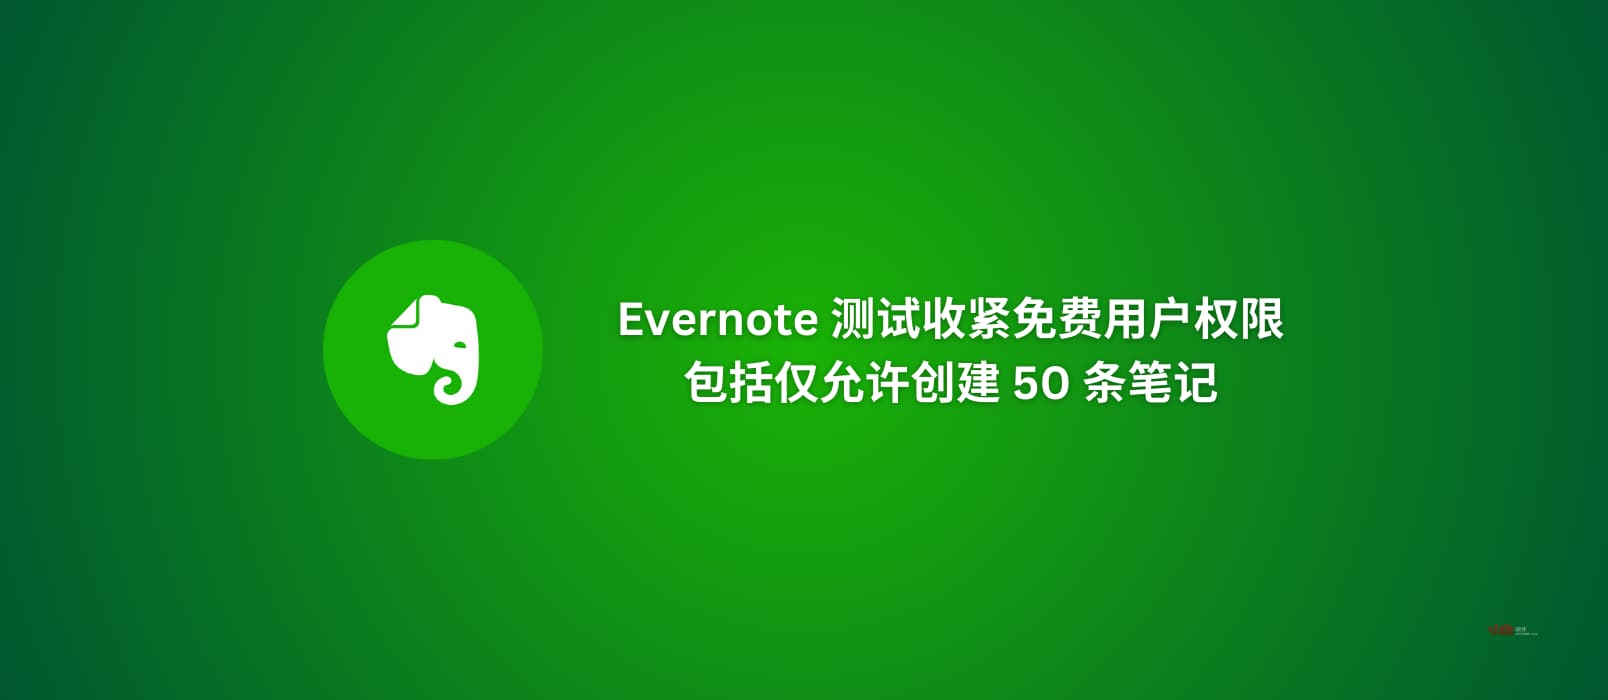 Evernote 测试收紧免费用户权限，包括仅允许创建 50 条笔记